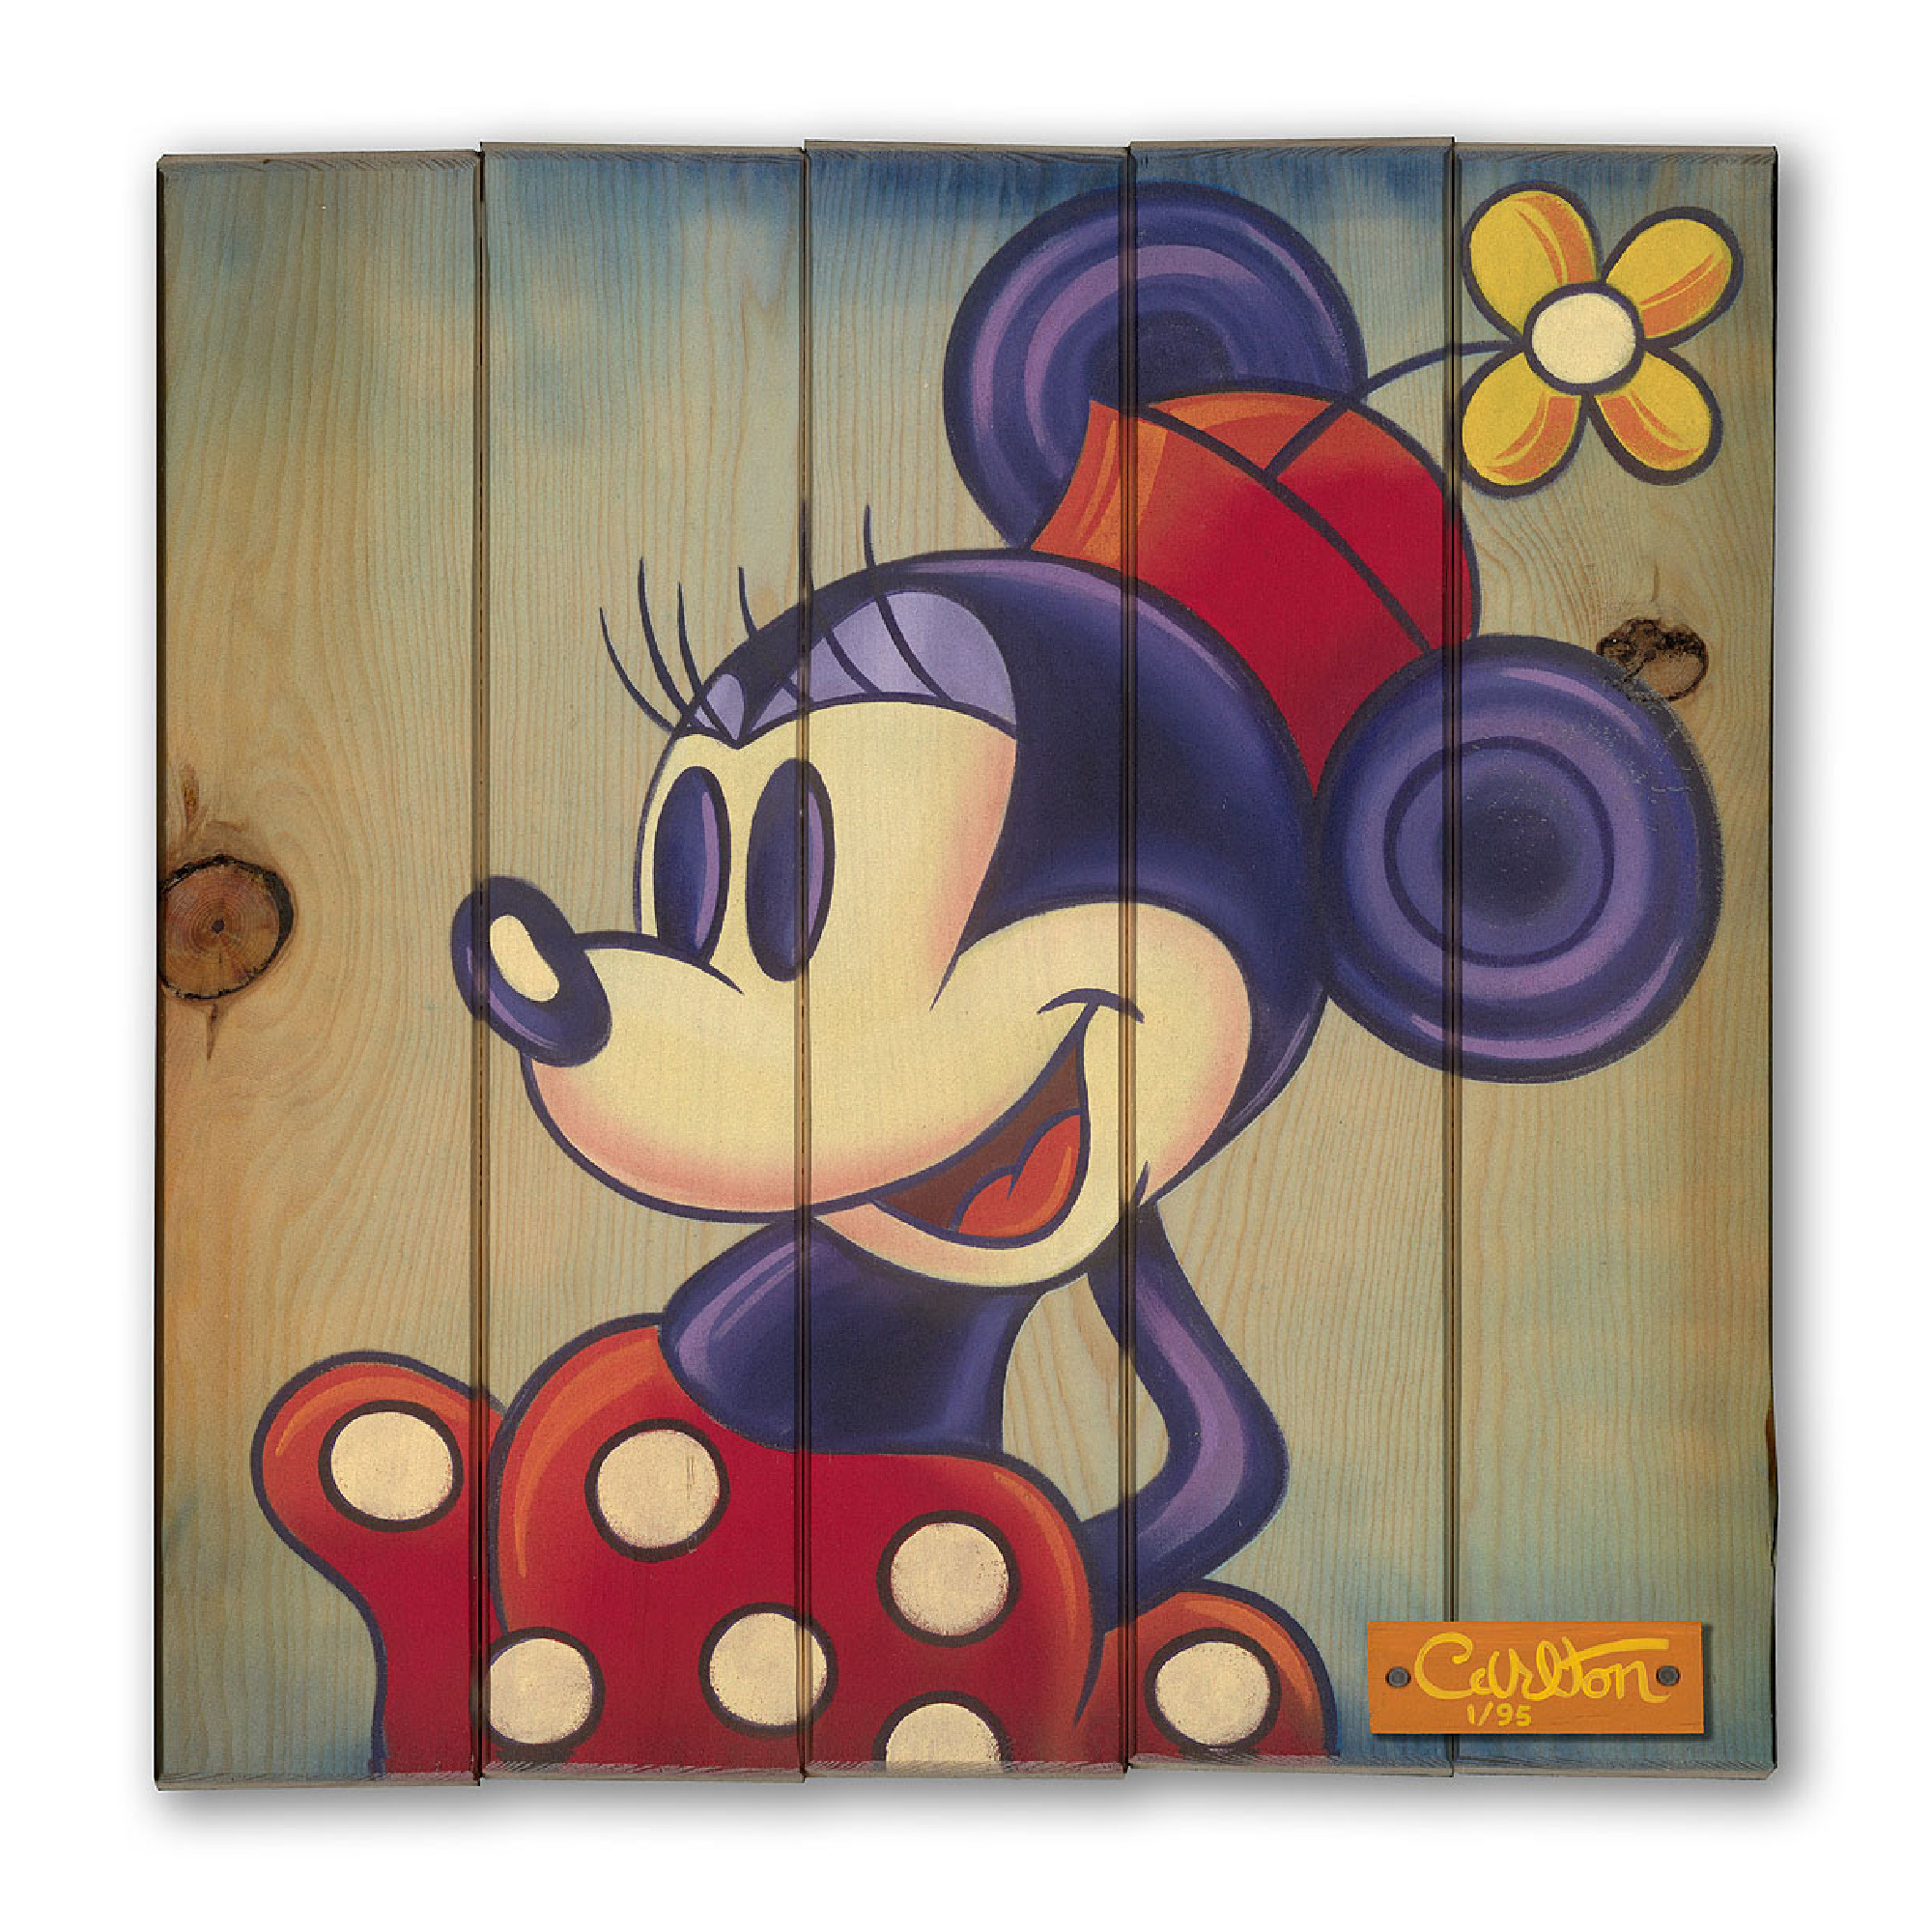 Disney Classic Minnie Mouse